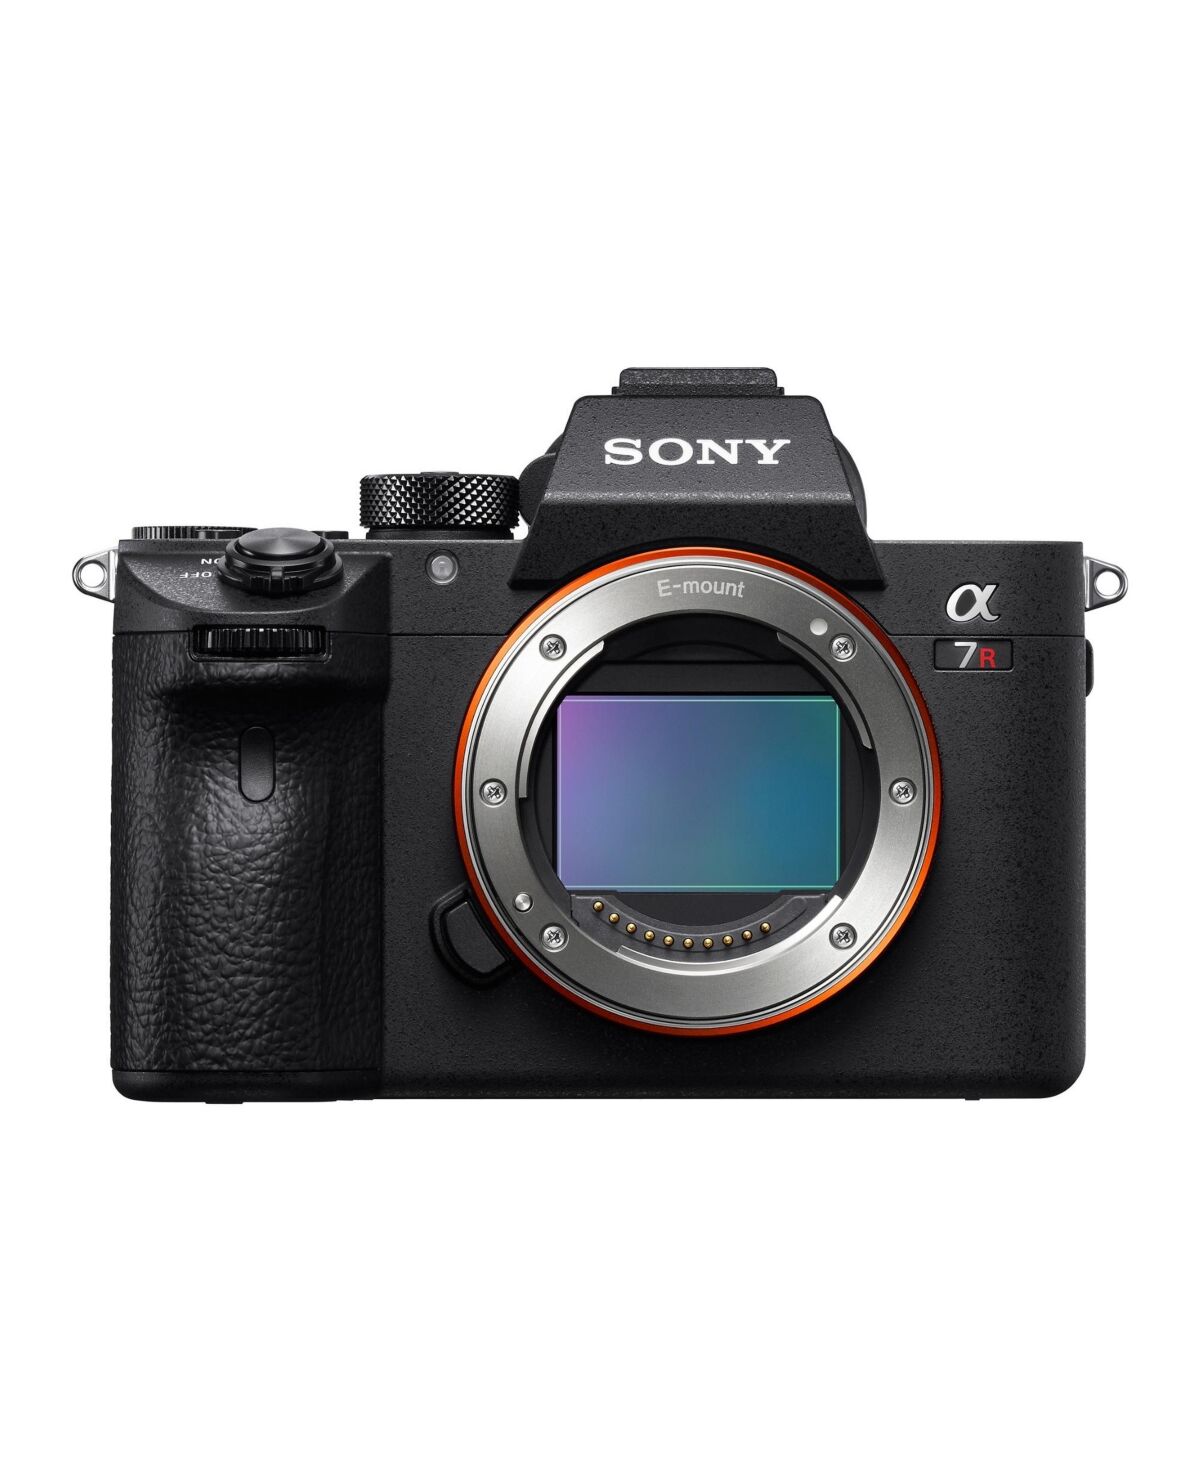 Sony Alpha a7R Iii A Full-Frame Mirrorless Camera Body (ILCE7RM3A/B) - Black